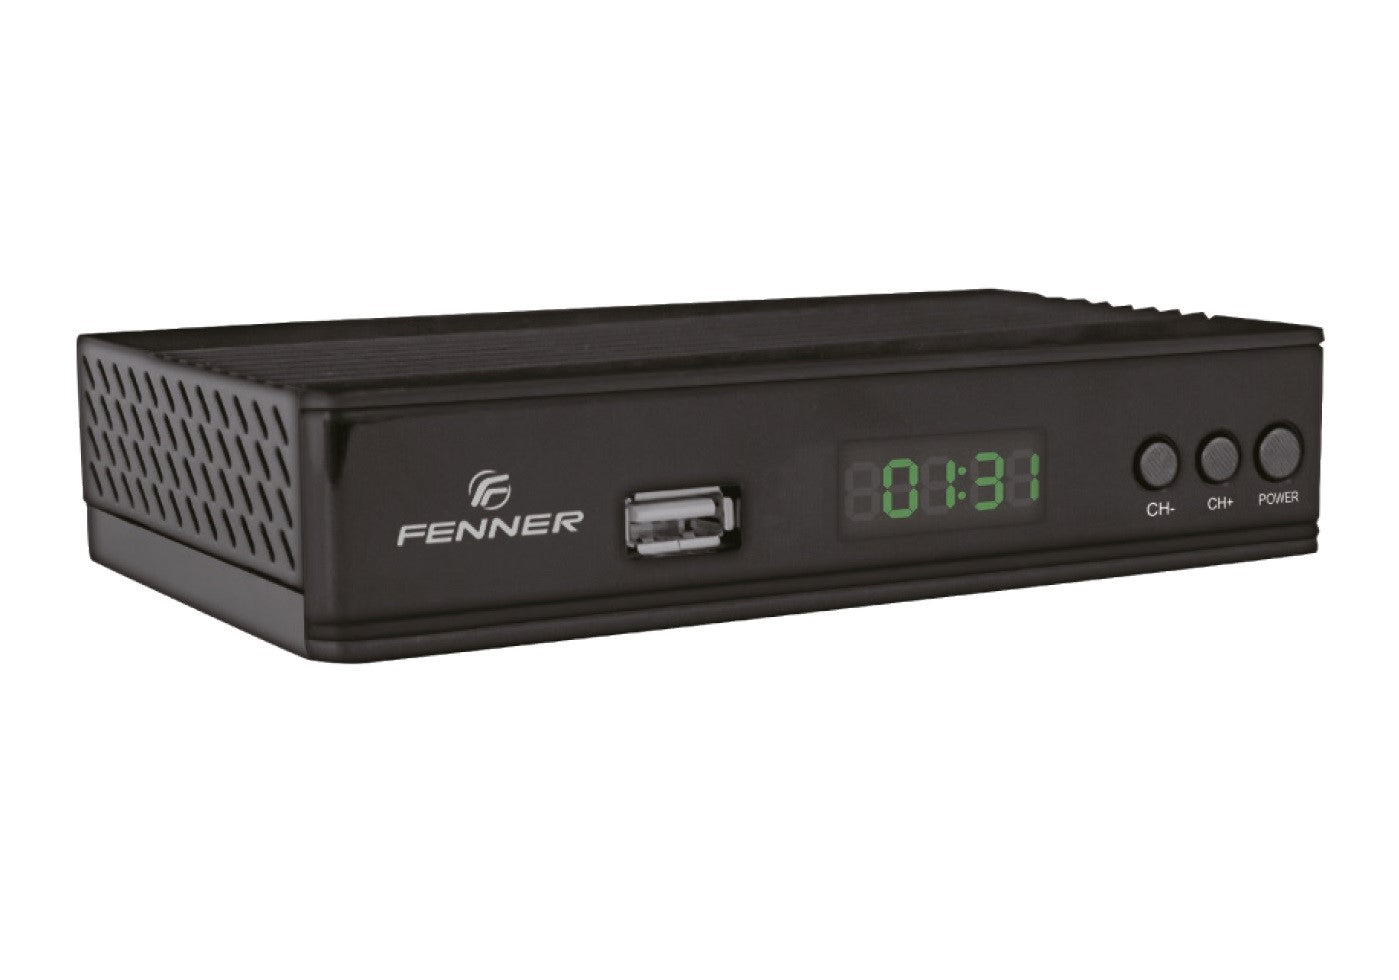 Fenner Tech Decoder FN-GX2 HD DVB-T2/HEVC USB 2.0